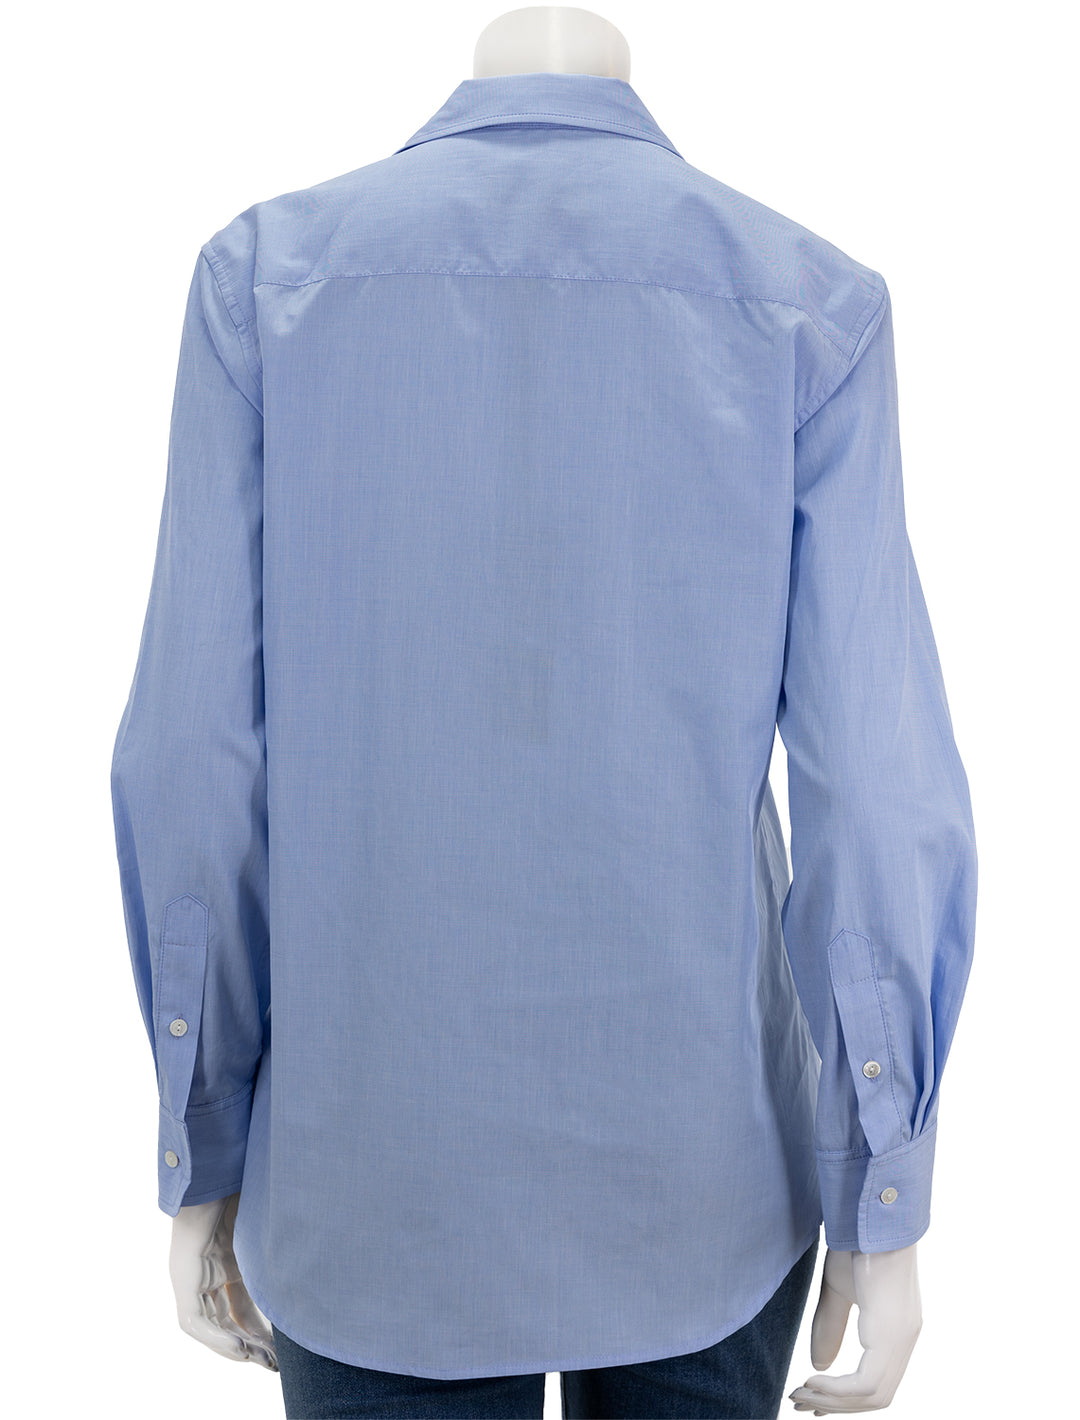 Back view of Nili Lotan's raphael classic shirt in light blue.